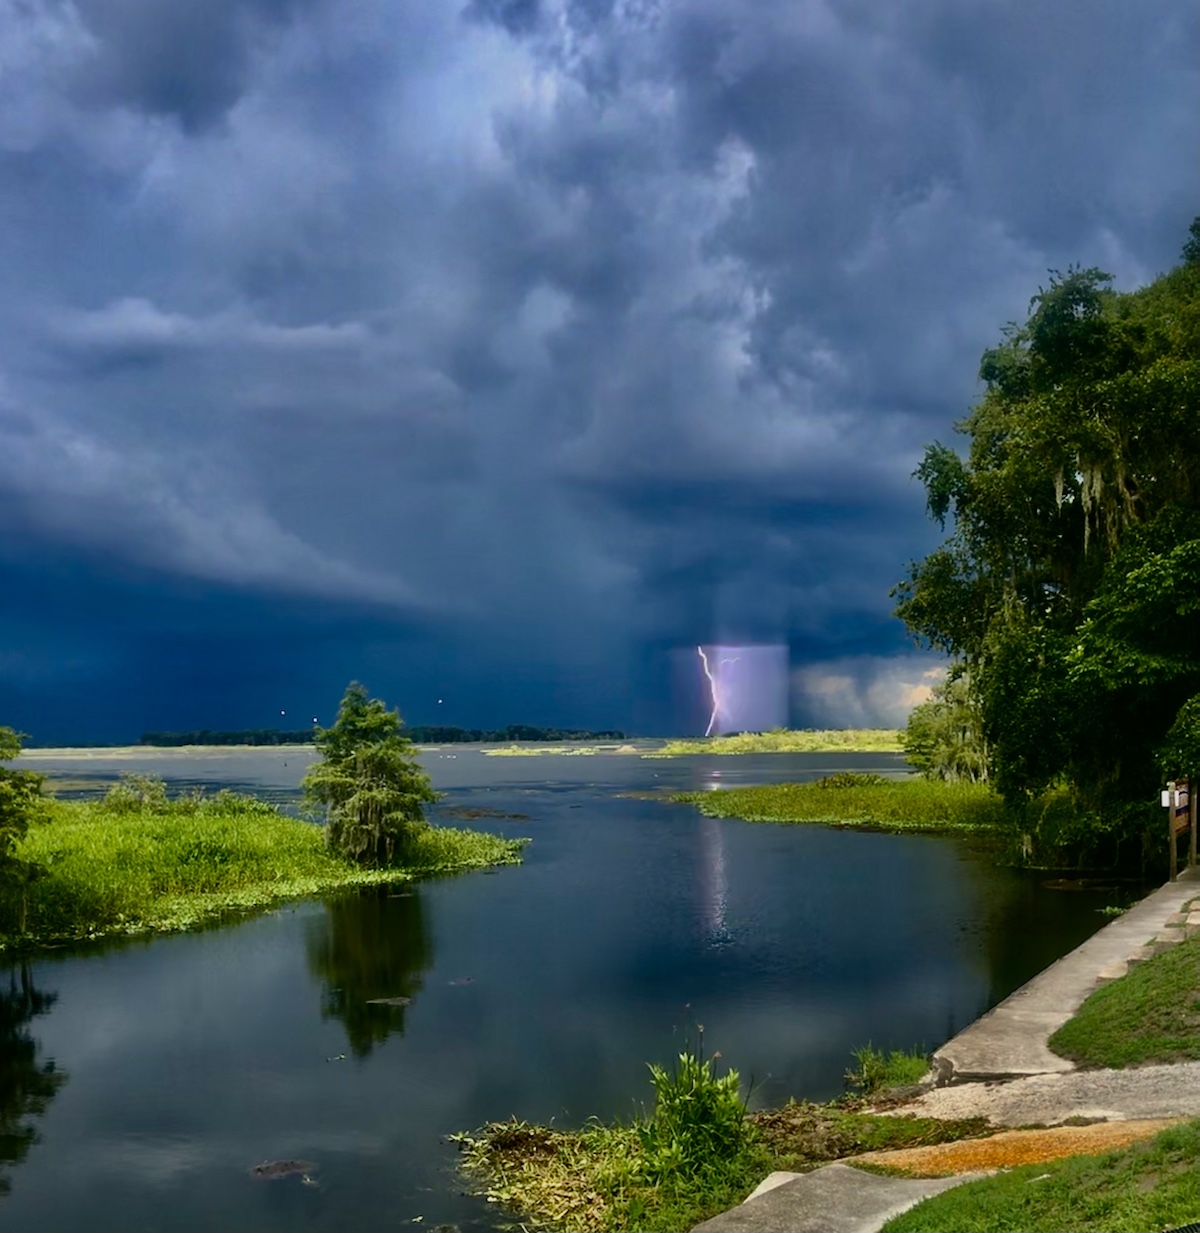 Afternoon Thunderstorm Over Orange Lake